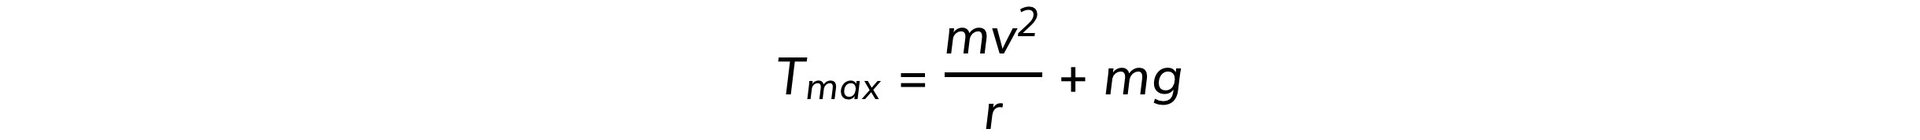 6.1.4-Equation-4